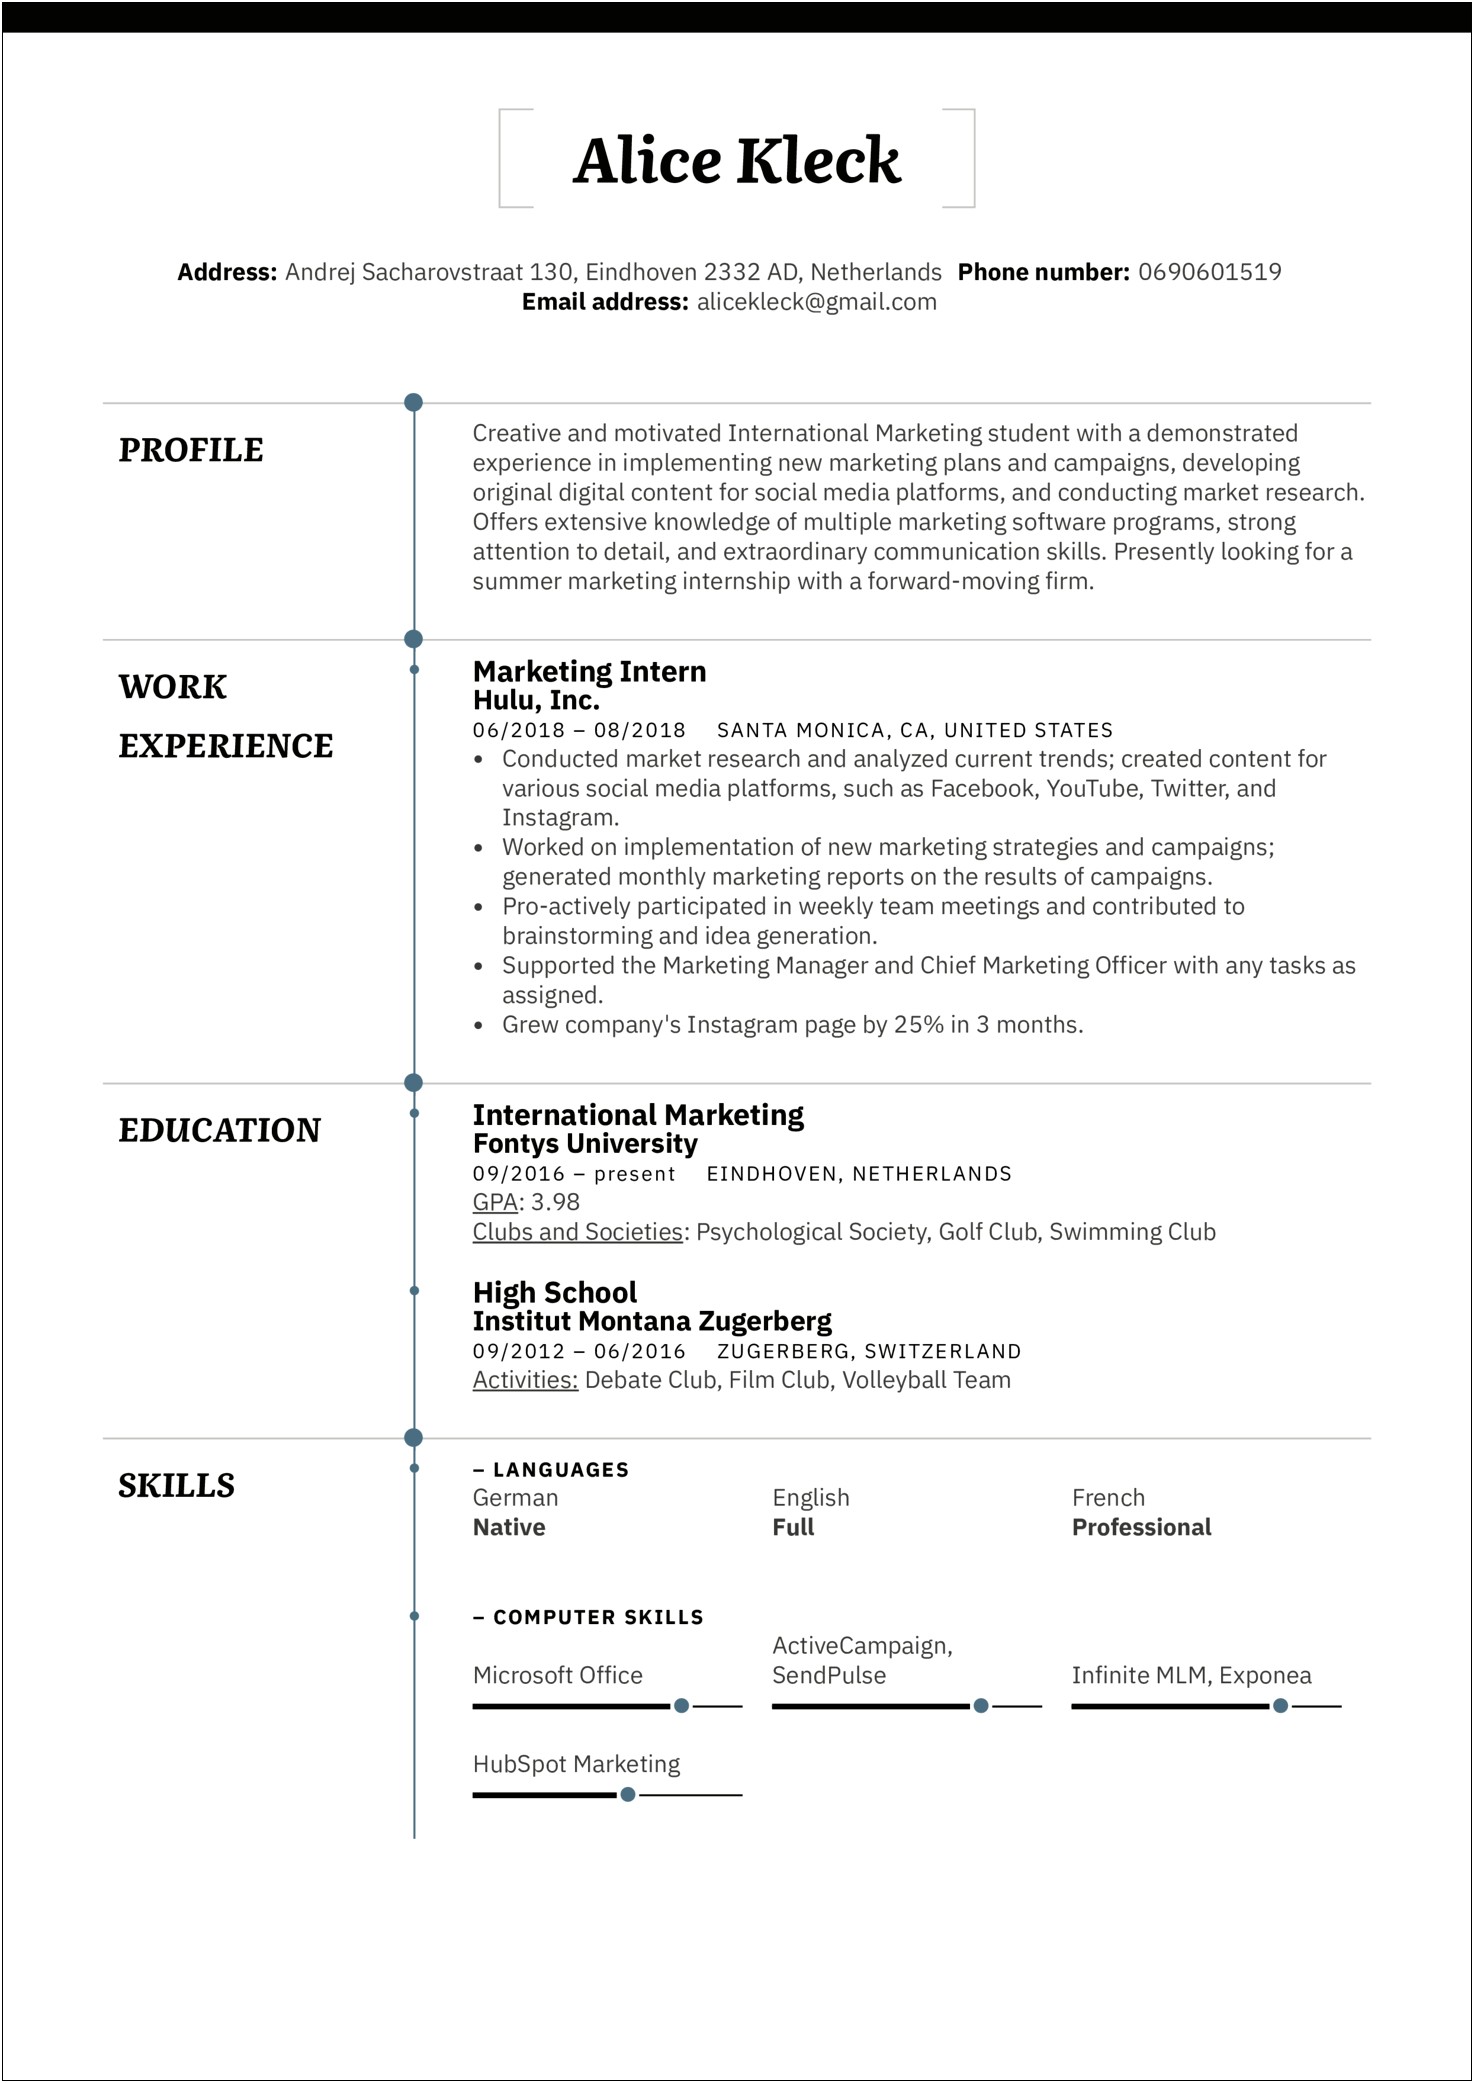 Resume Objective For Ojt Marketing Student